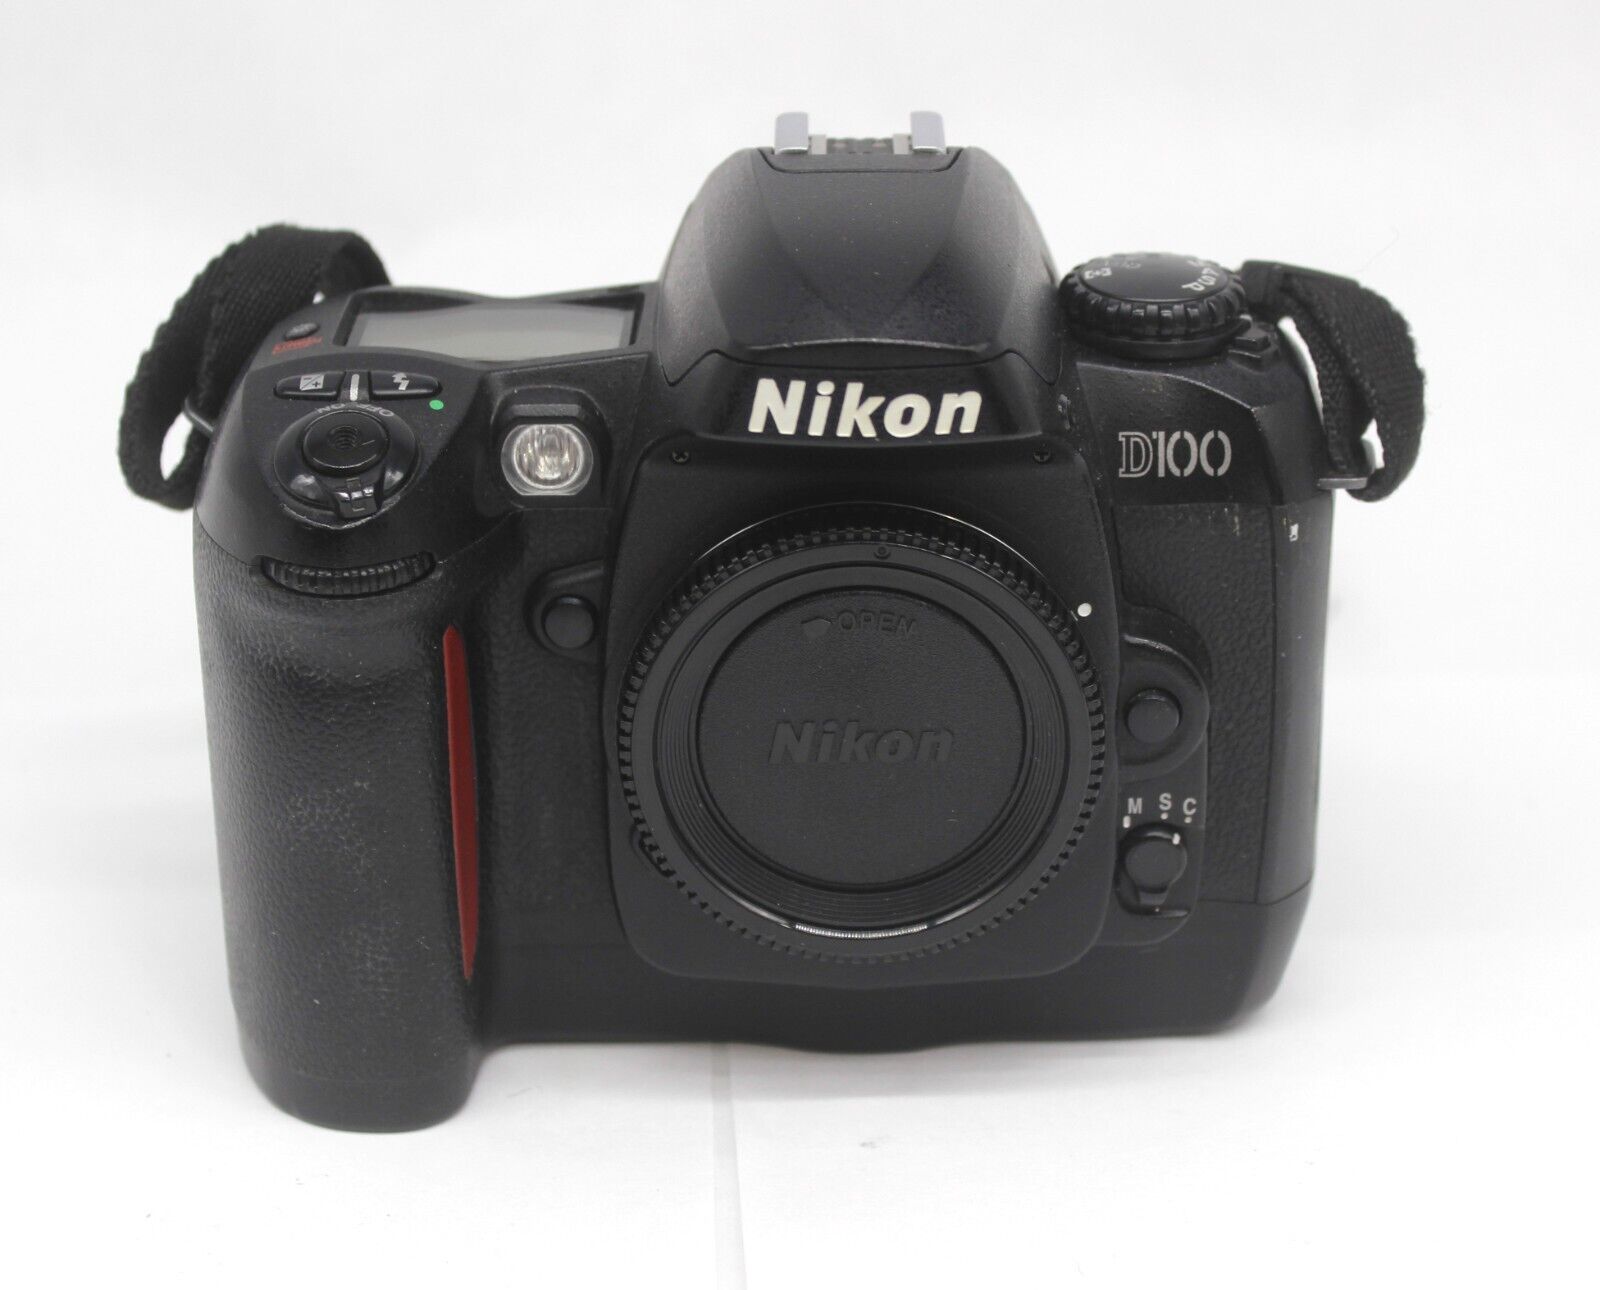 Nikon D100 6.1 MP Digital SLR Camera - Black (Body Only)